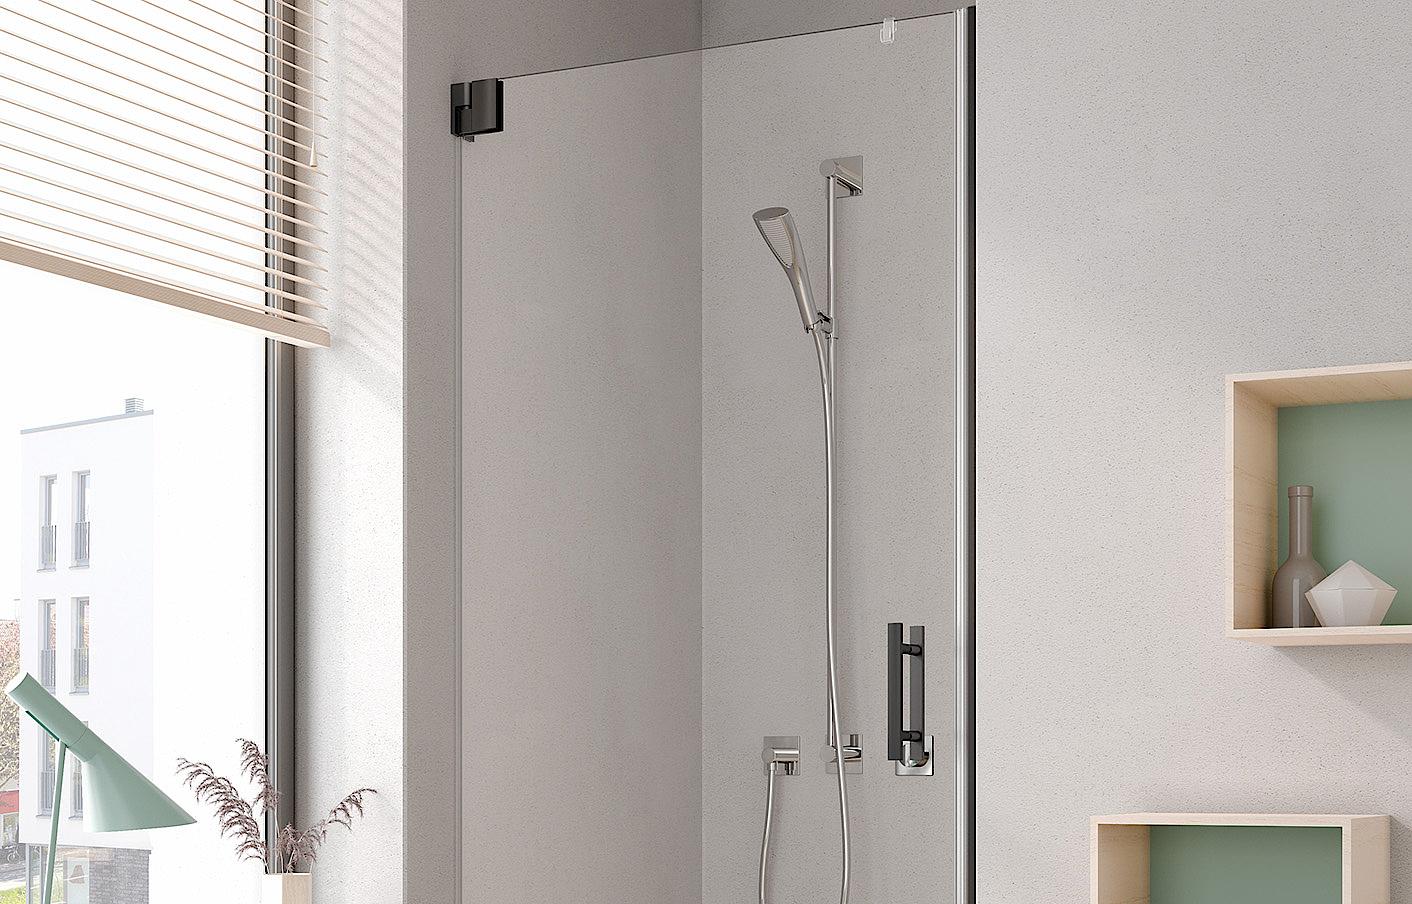 Kermi shower enclosure, FILIA single panel hinged door, Black